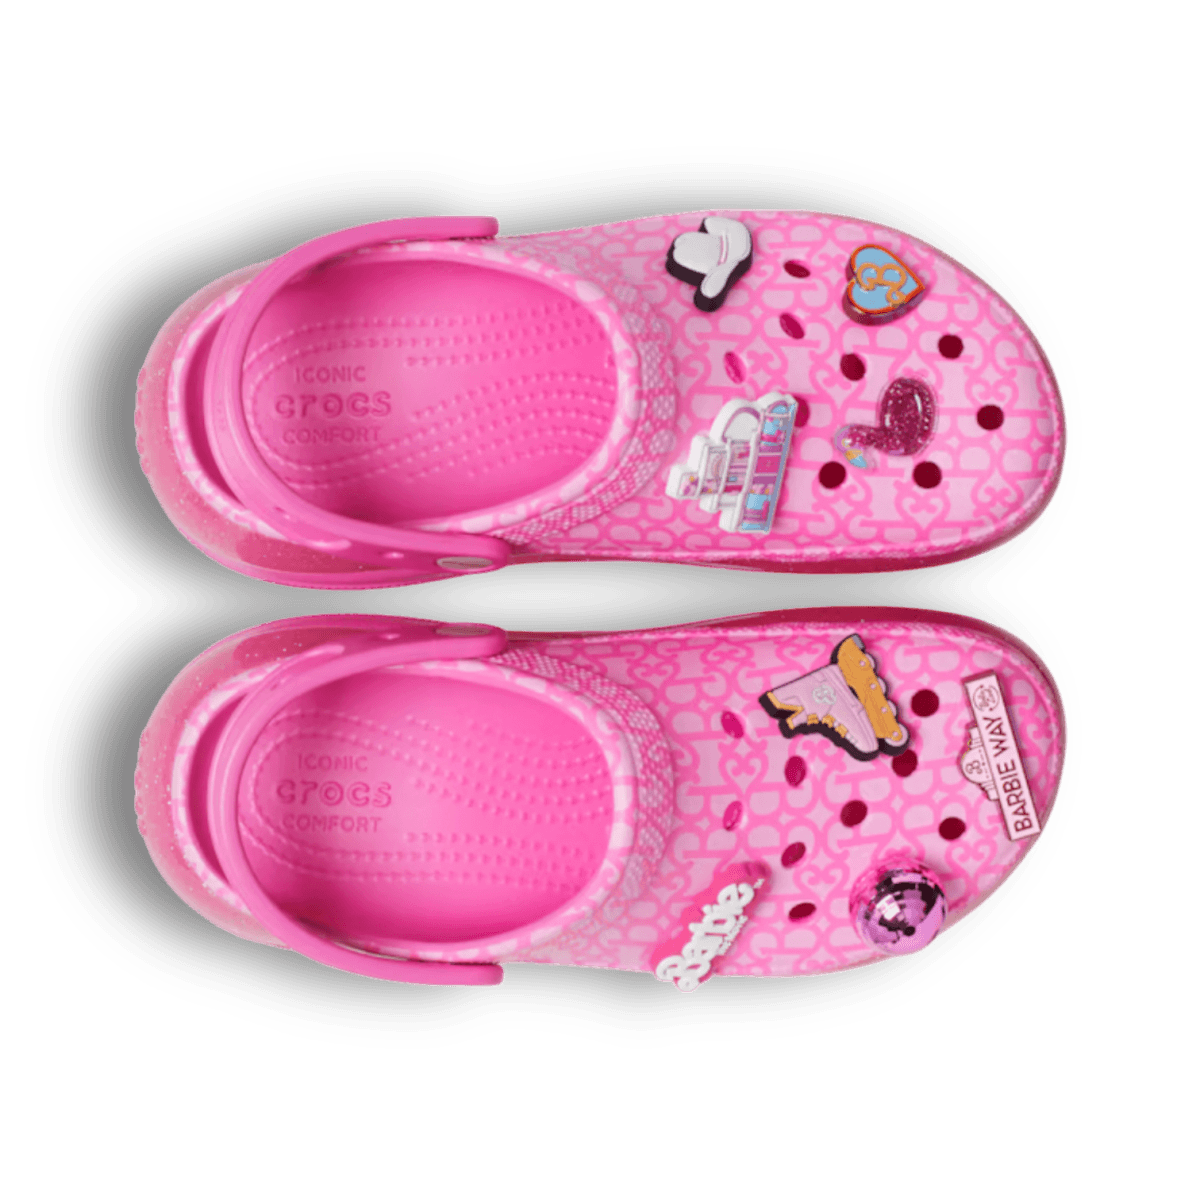 Crocs Crush Clog Barbie Black Pink